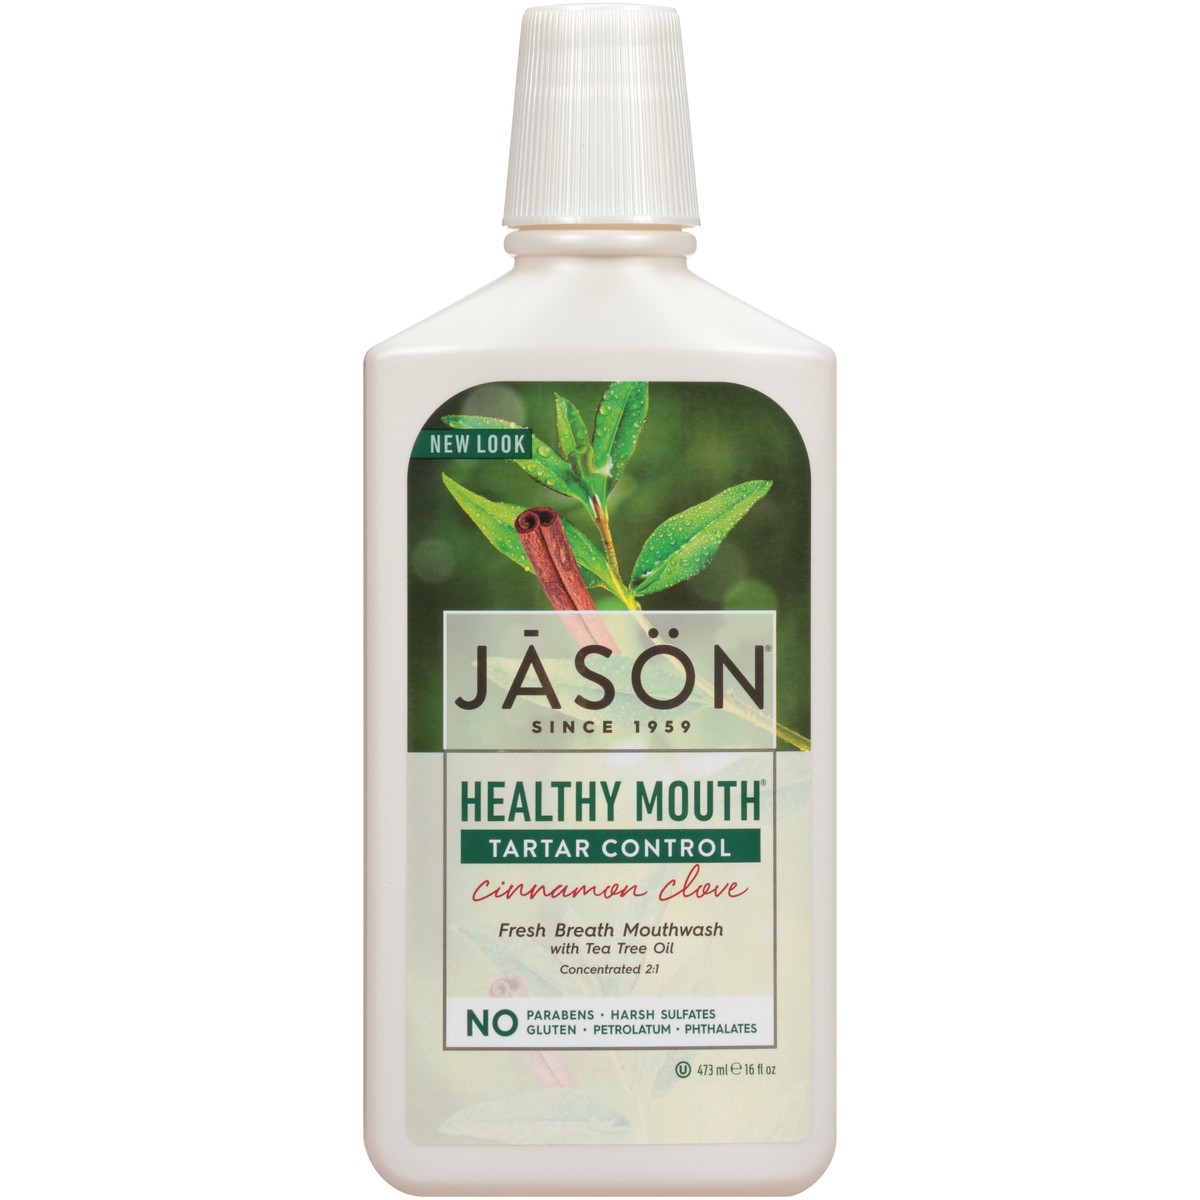 slide 5 of 8, Jason JĀSON Healthy Mouth Tartar Control Cinnamon Clove Fresh Breath Mouthwash 16 fl. oz. Bottle, 16 fl oz